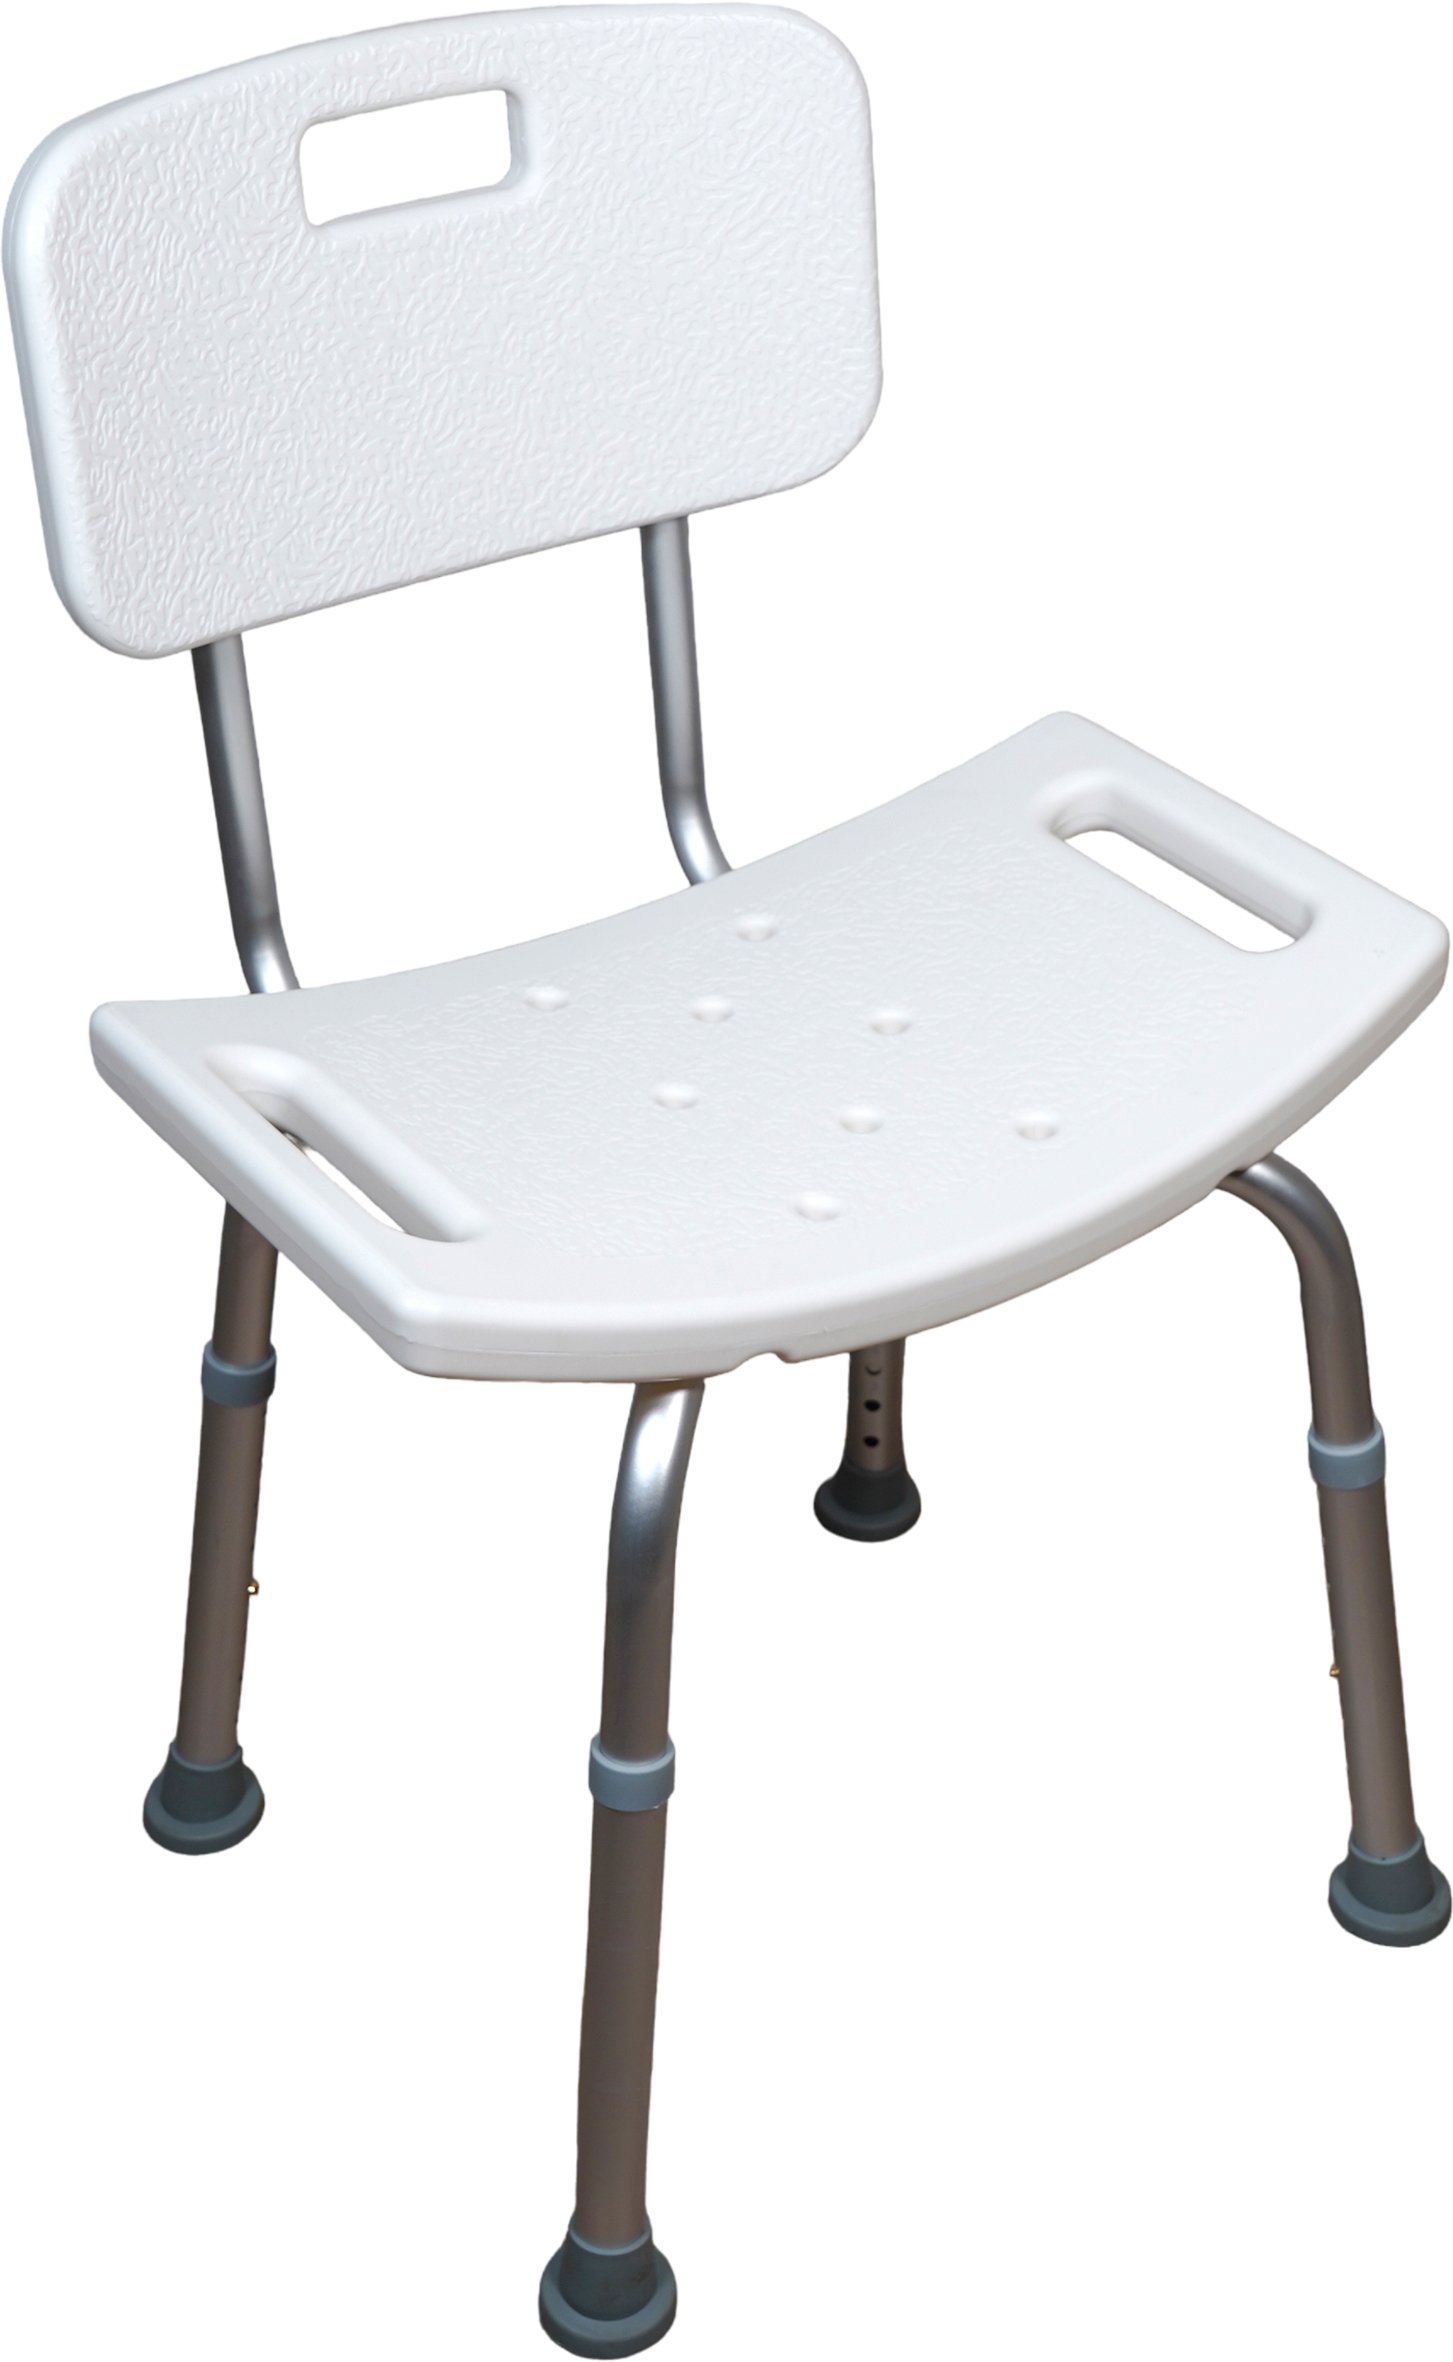 shower-stool chair